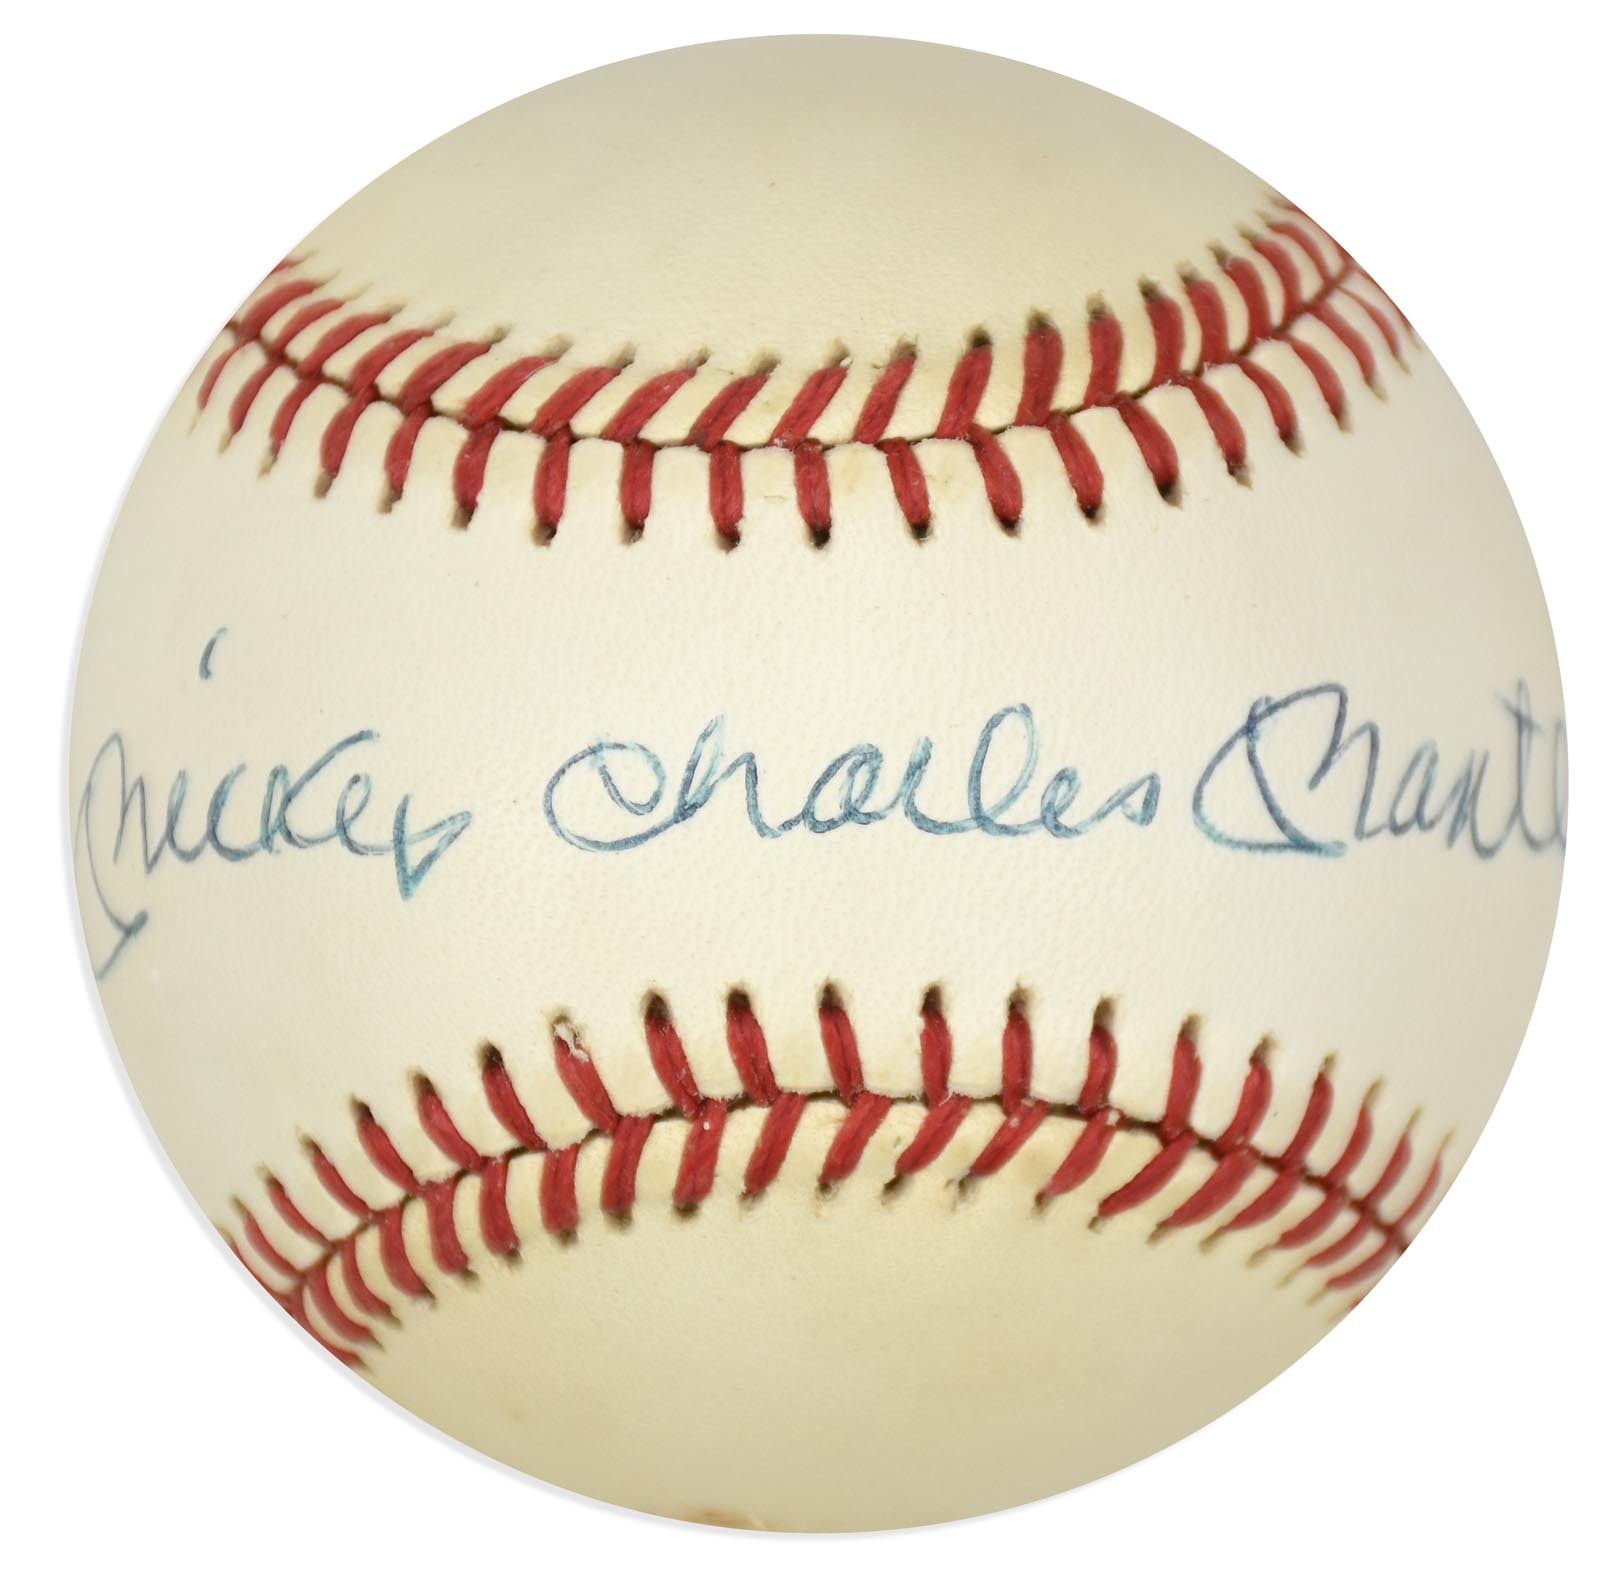 "Mickey Charles Mantle" Full Name Signed Baseball (PSA)